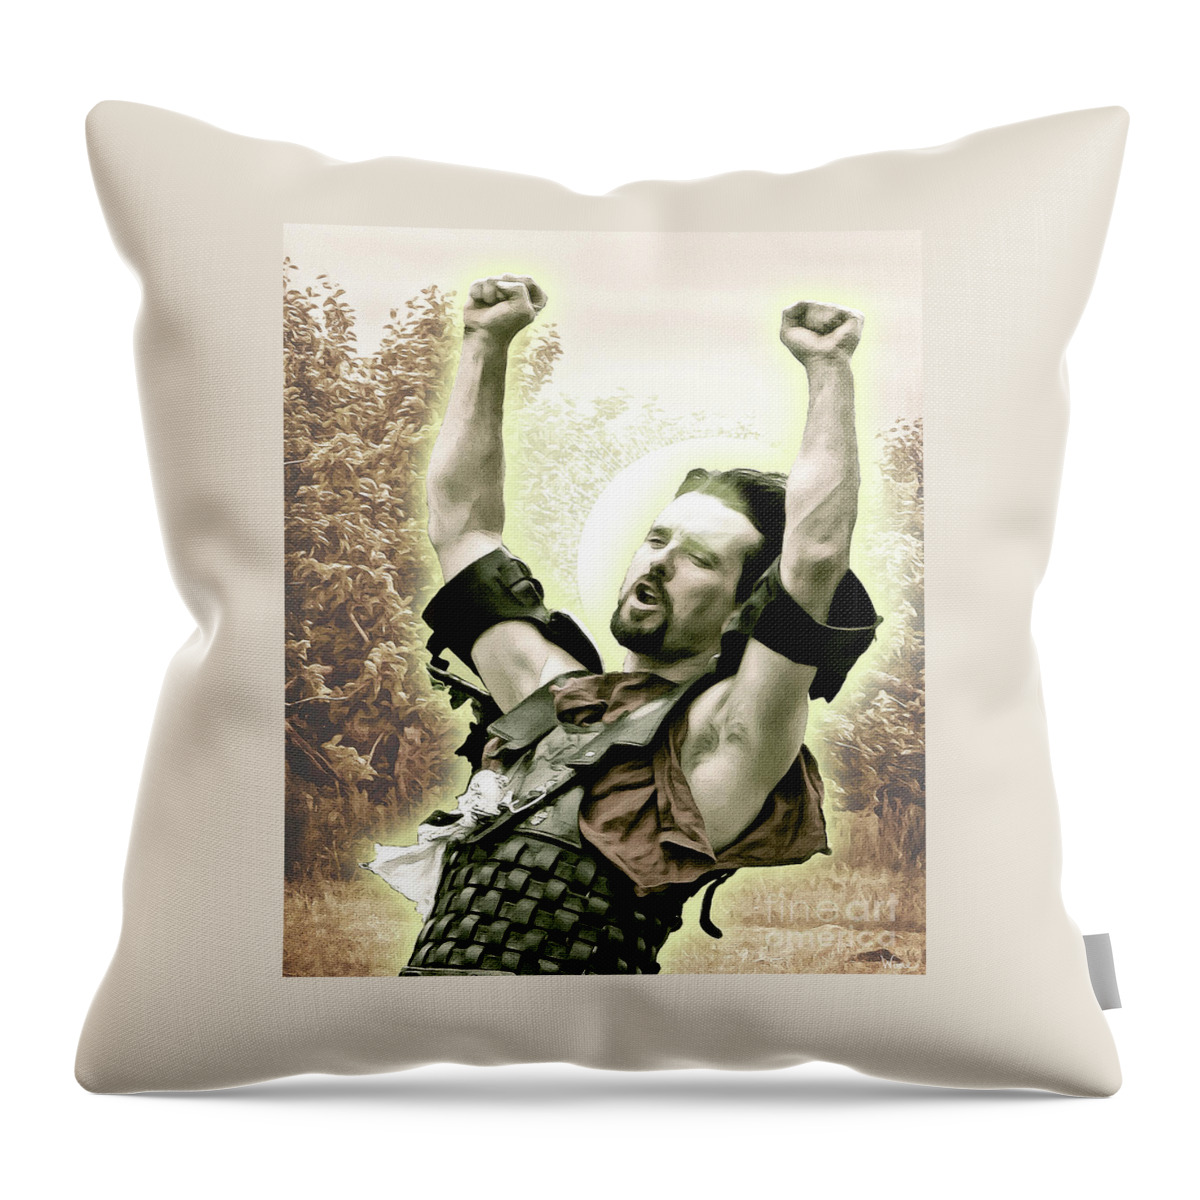 Lise Winne Throw Pillow featuring the digital art Healing Victory by Lise Winne